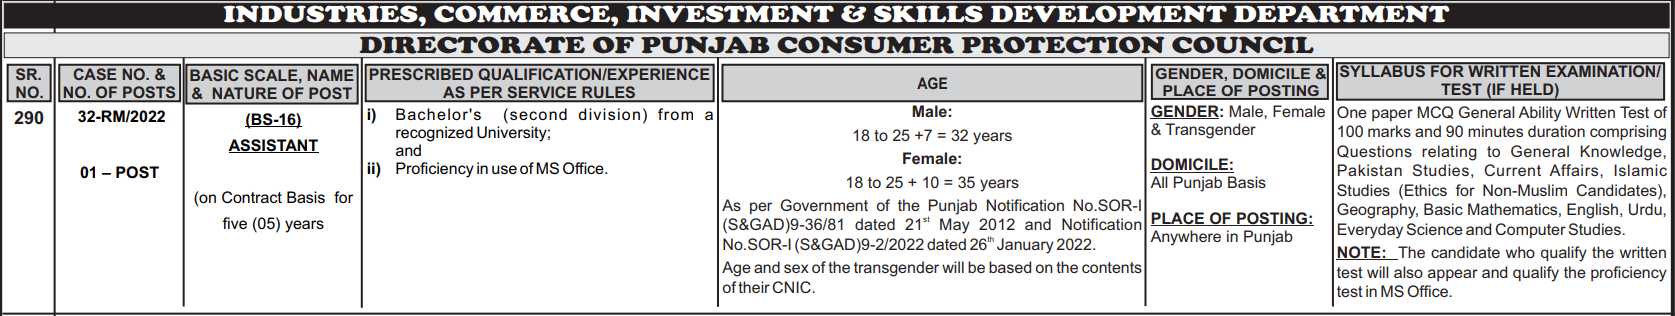 Industries Commerce, Investment & Skills Department Punjab jobs 2023